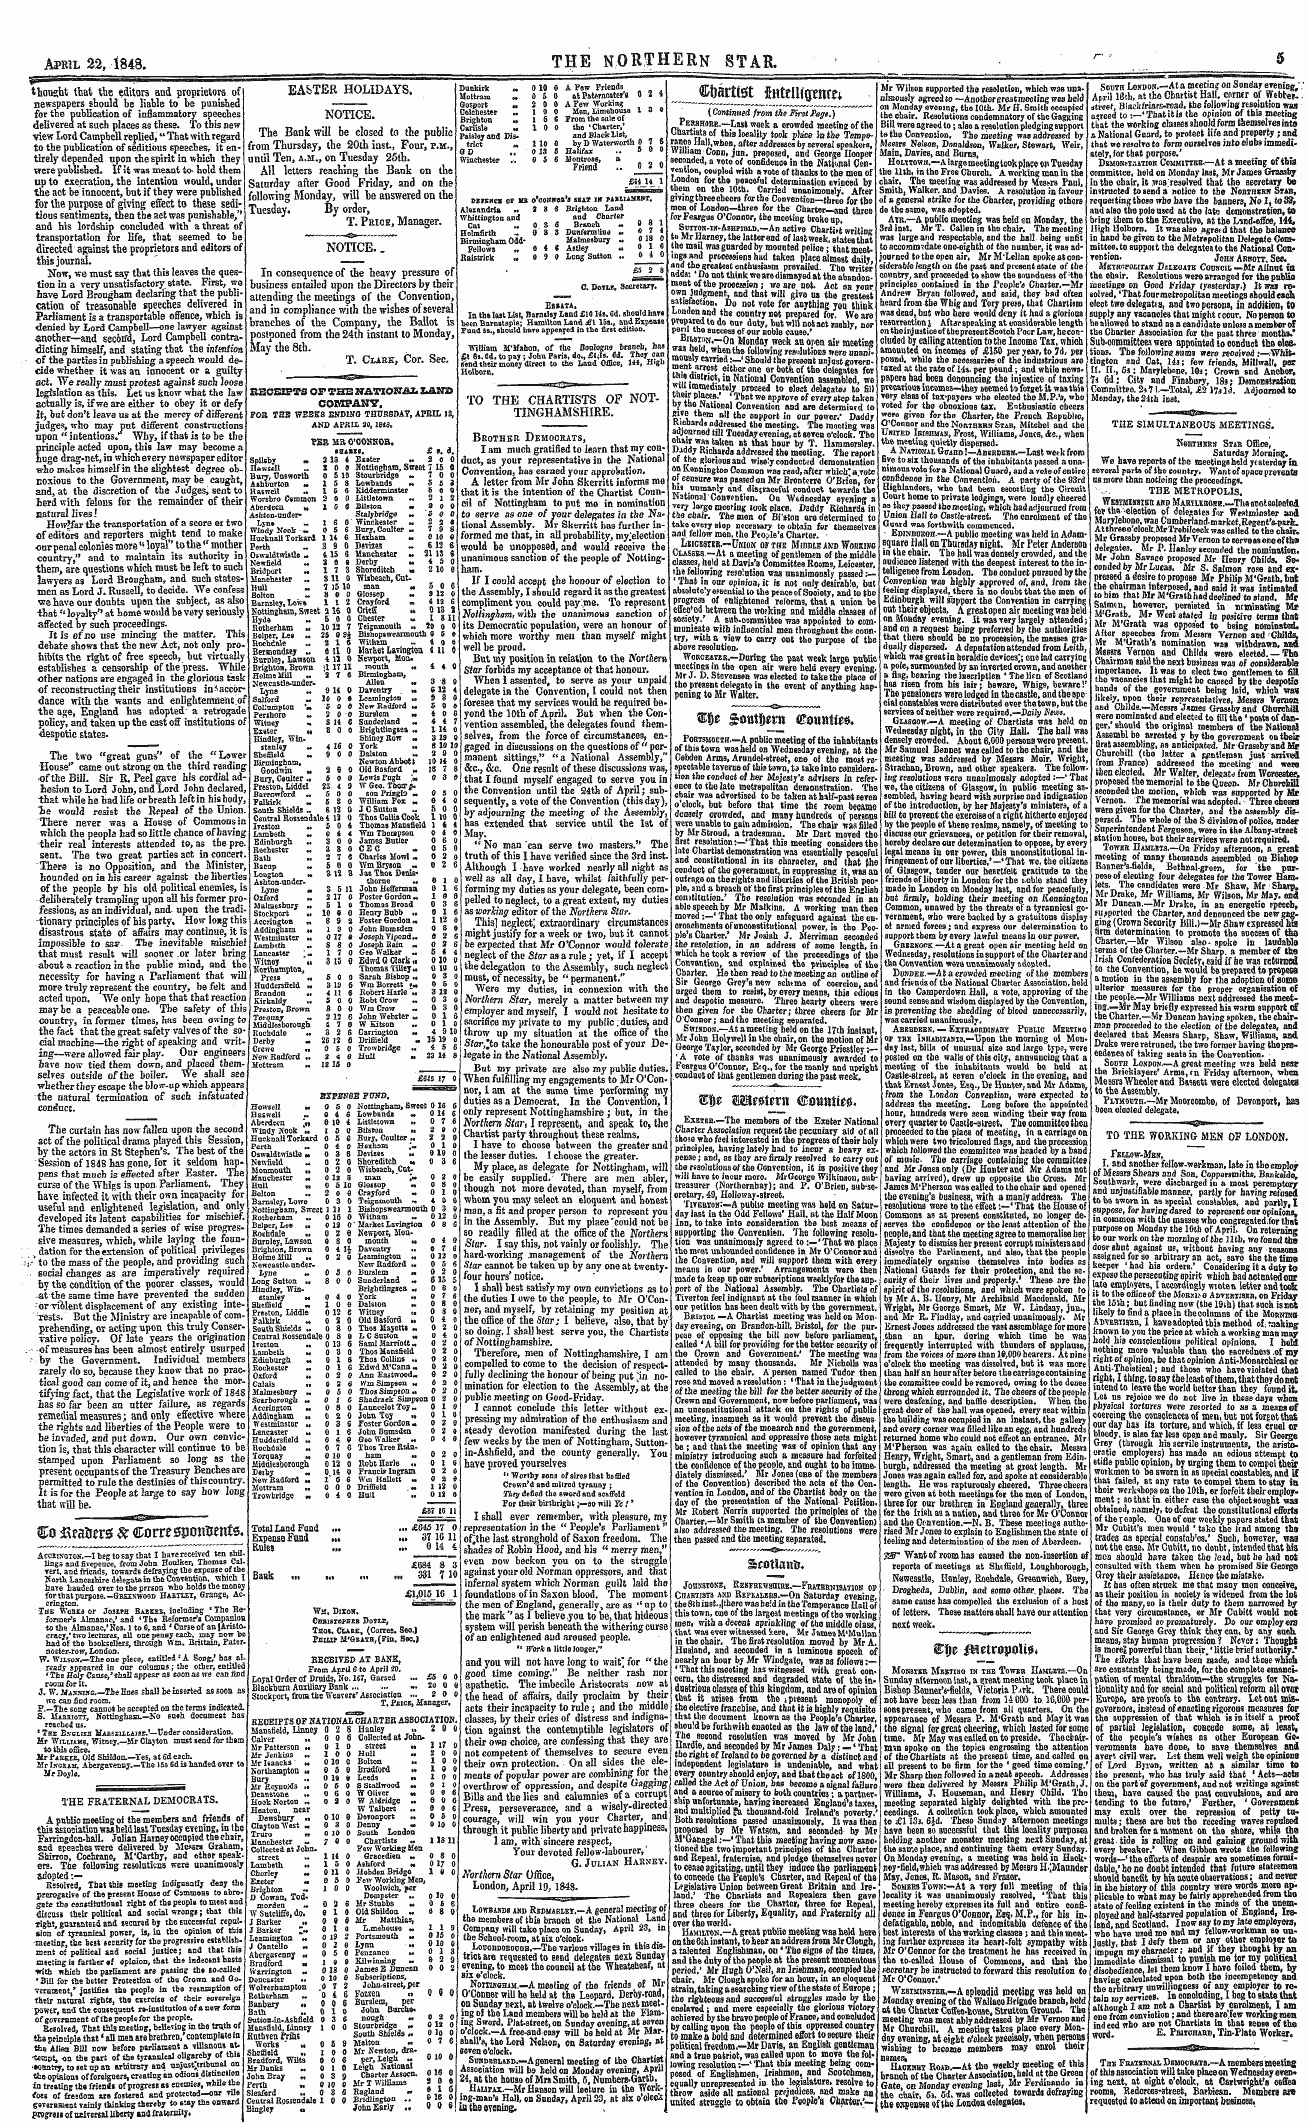 Northern Star (1837-1852): jS F Y, 3rd edition - Ctjartist Ihteilcpnre;